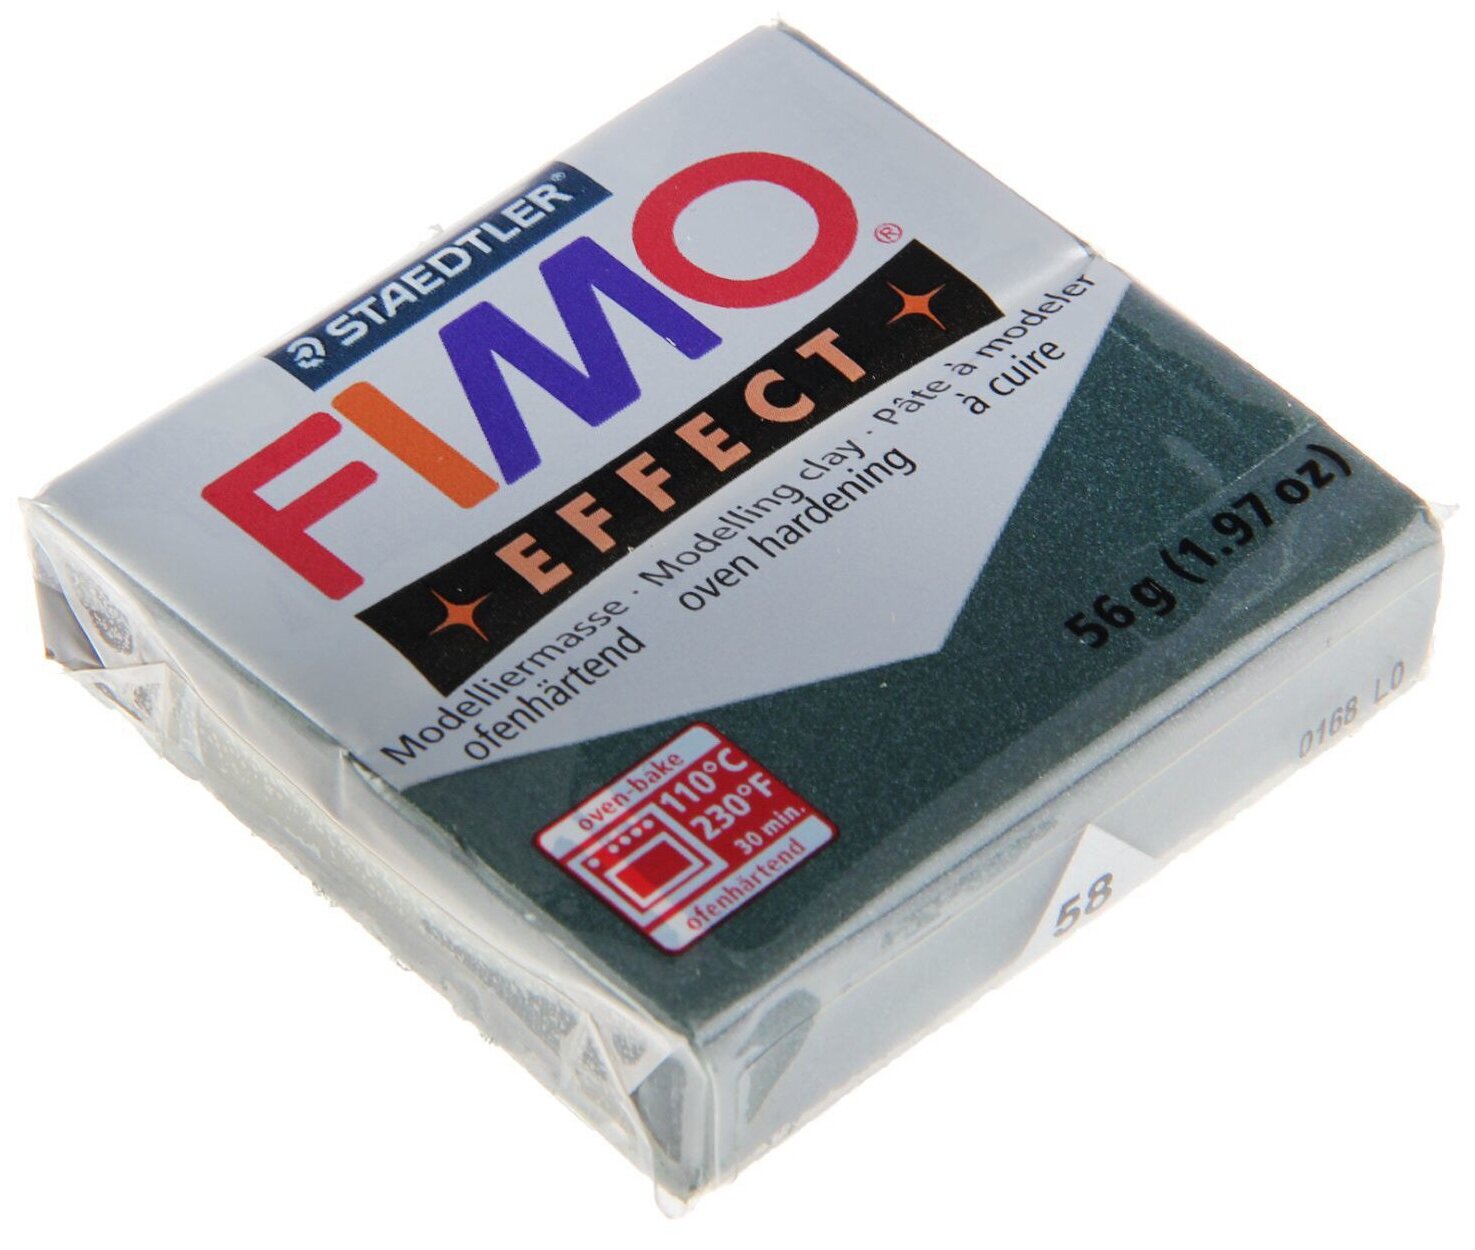   Fimo Effect 56 ,   58